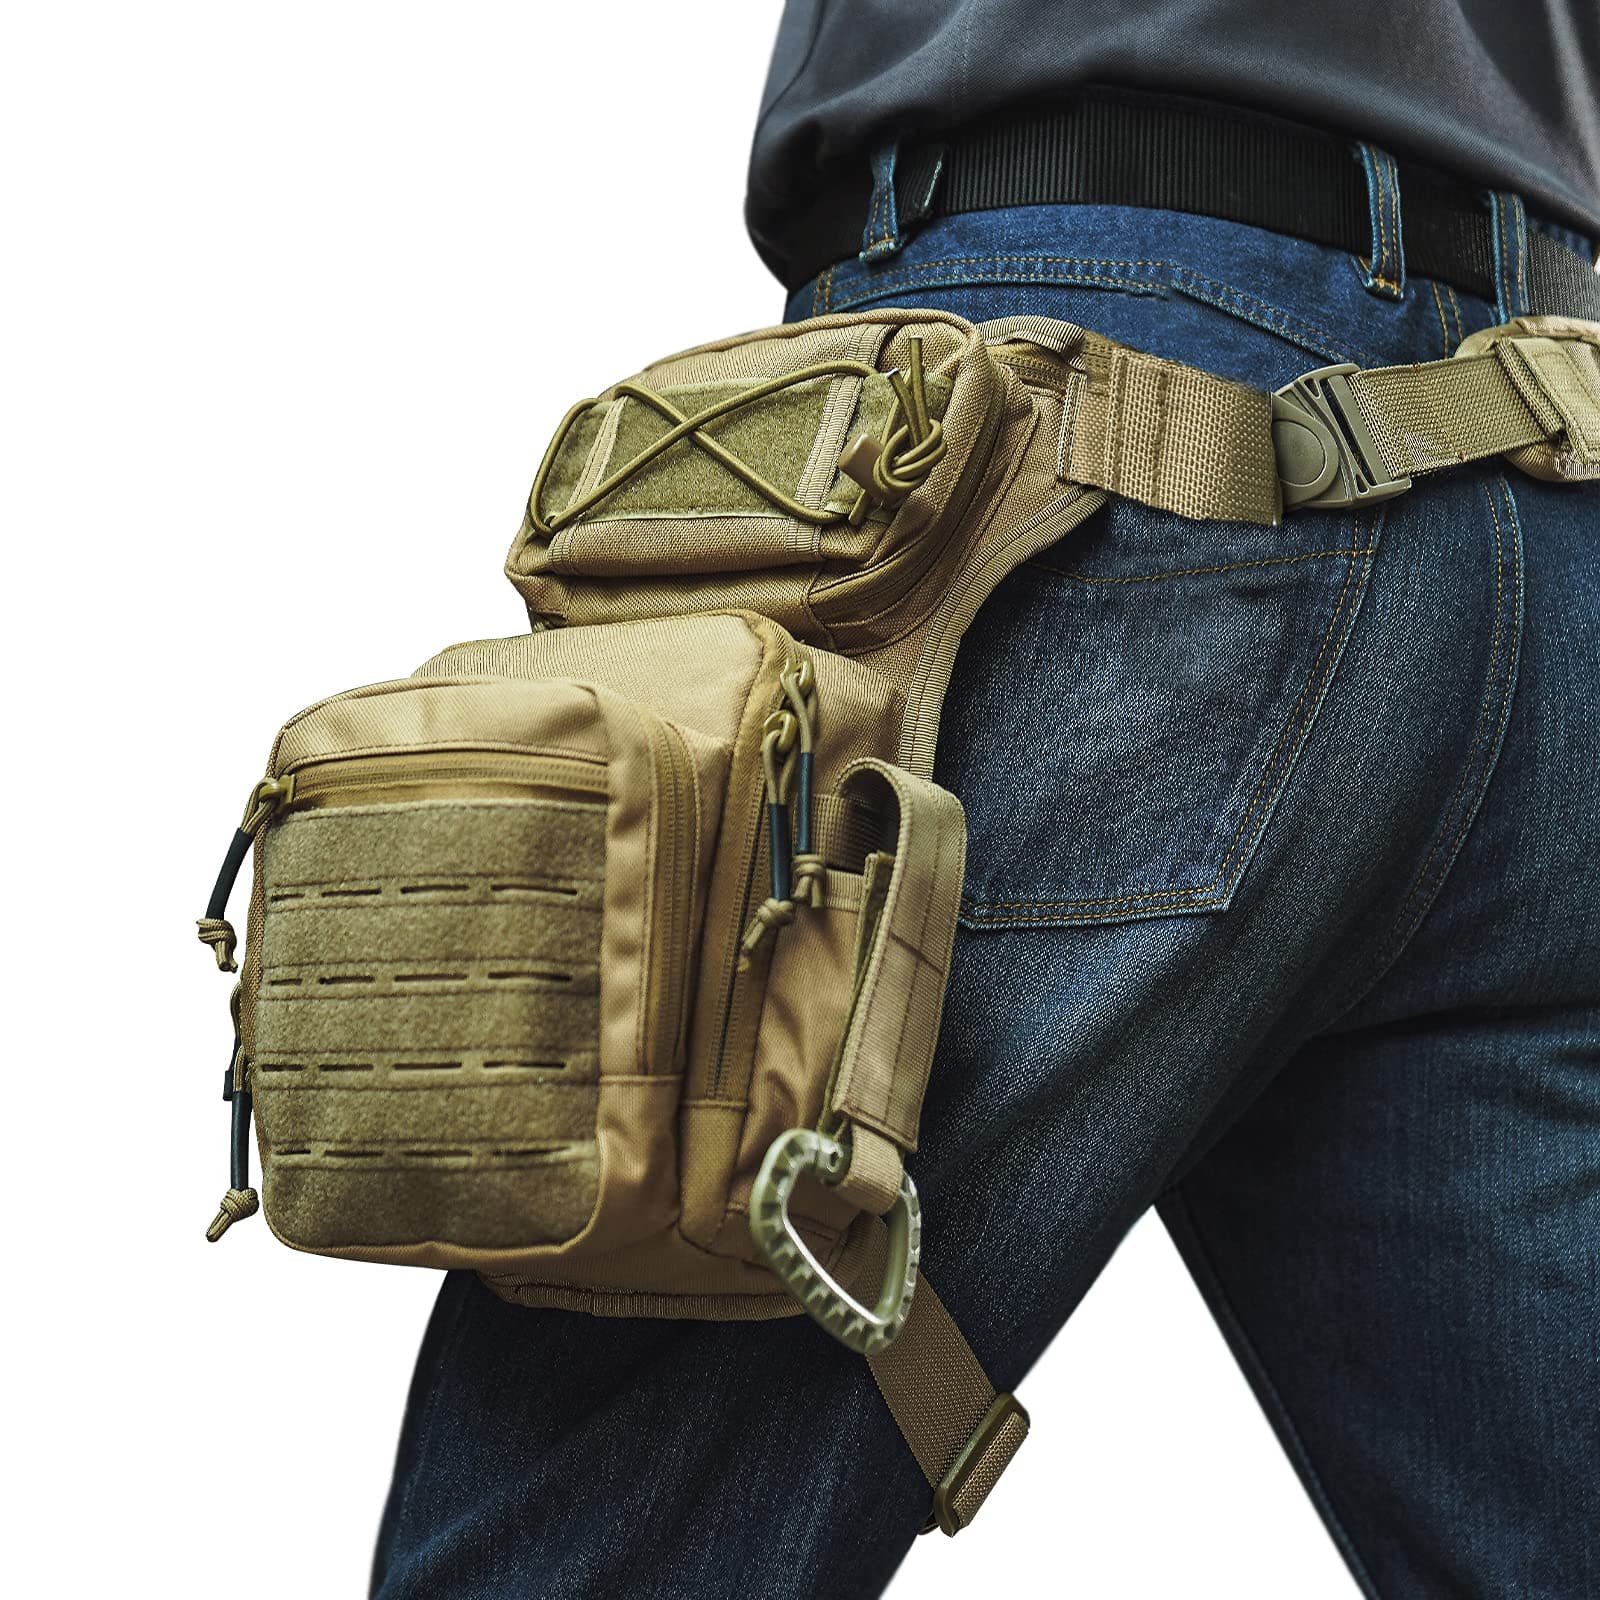  Drop Leg Bag for Men Women Military Tactical Thigh